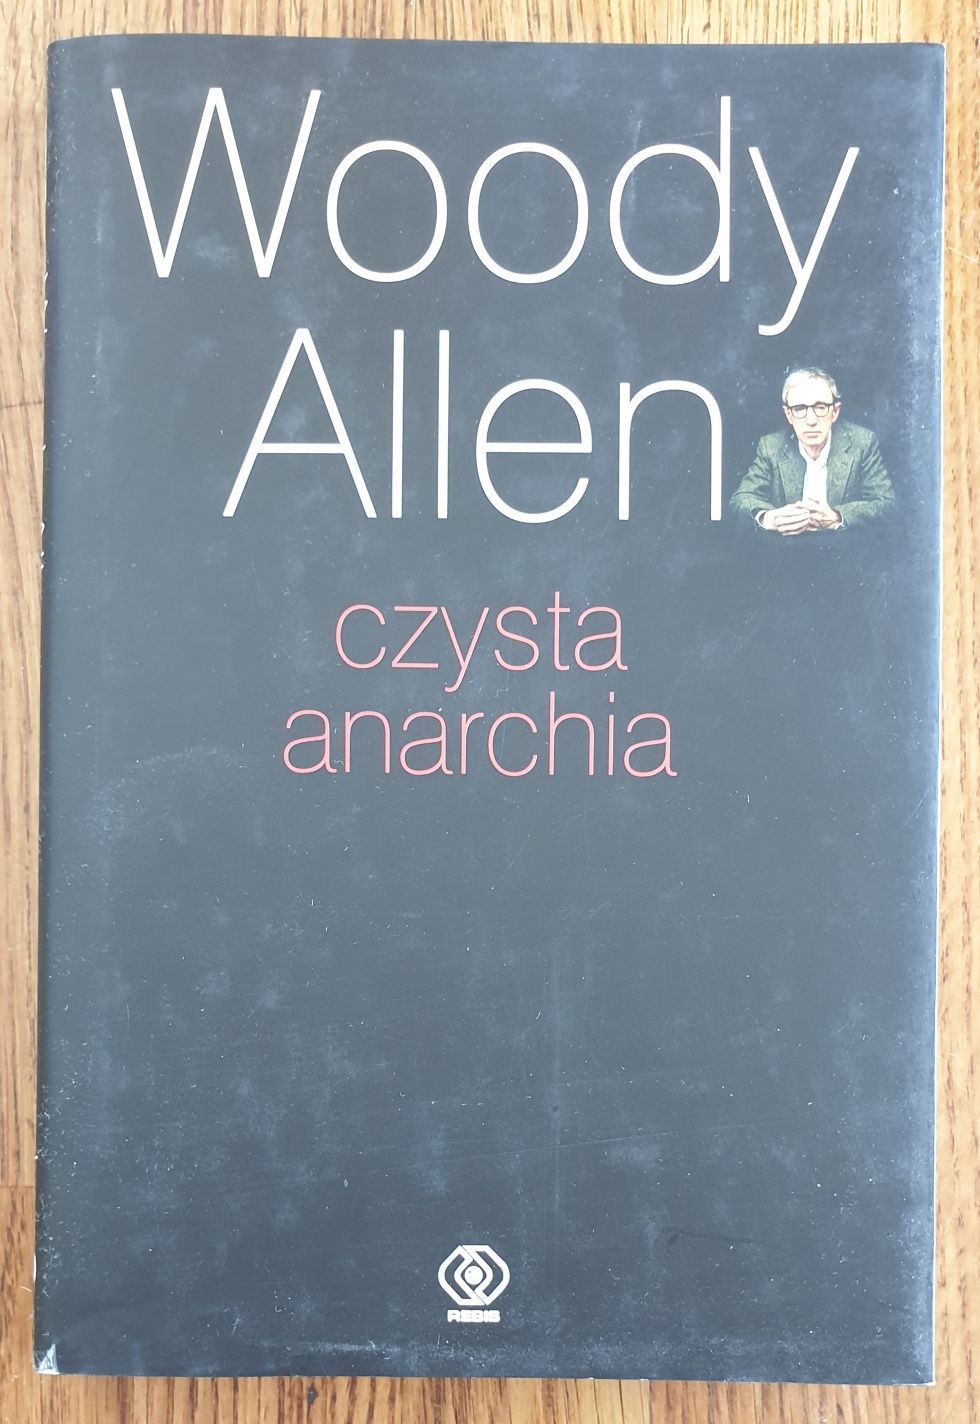 Woody Allen "Czysta anarchia"